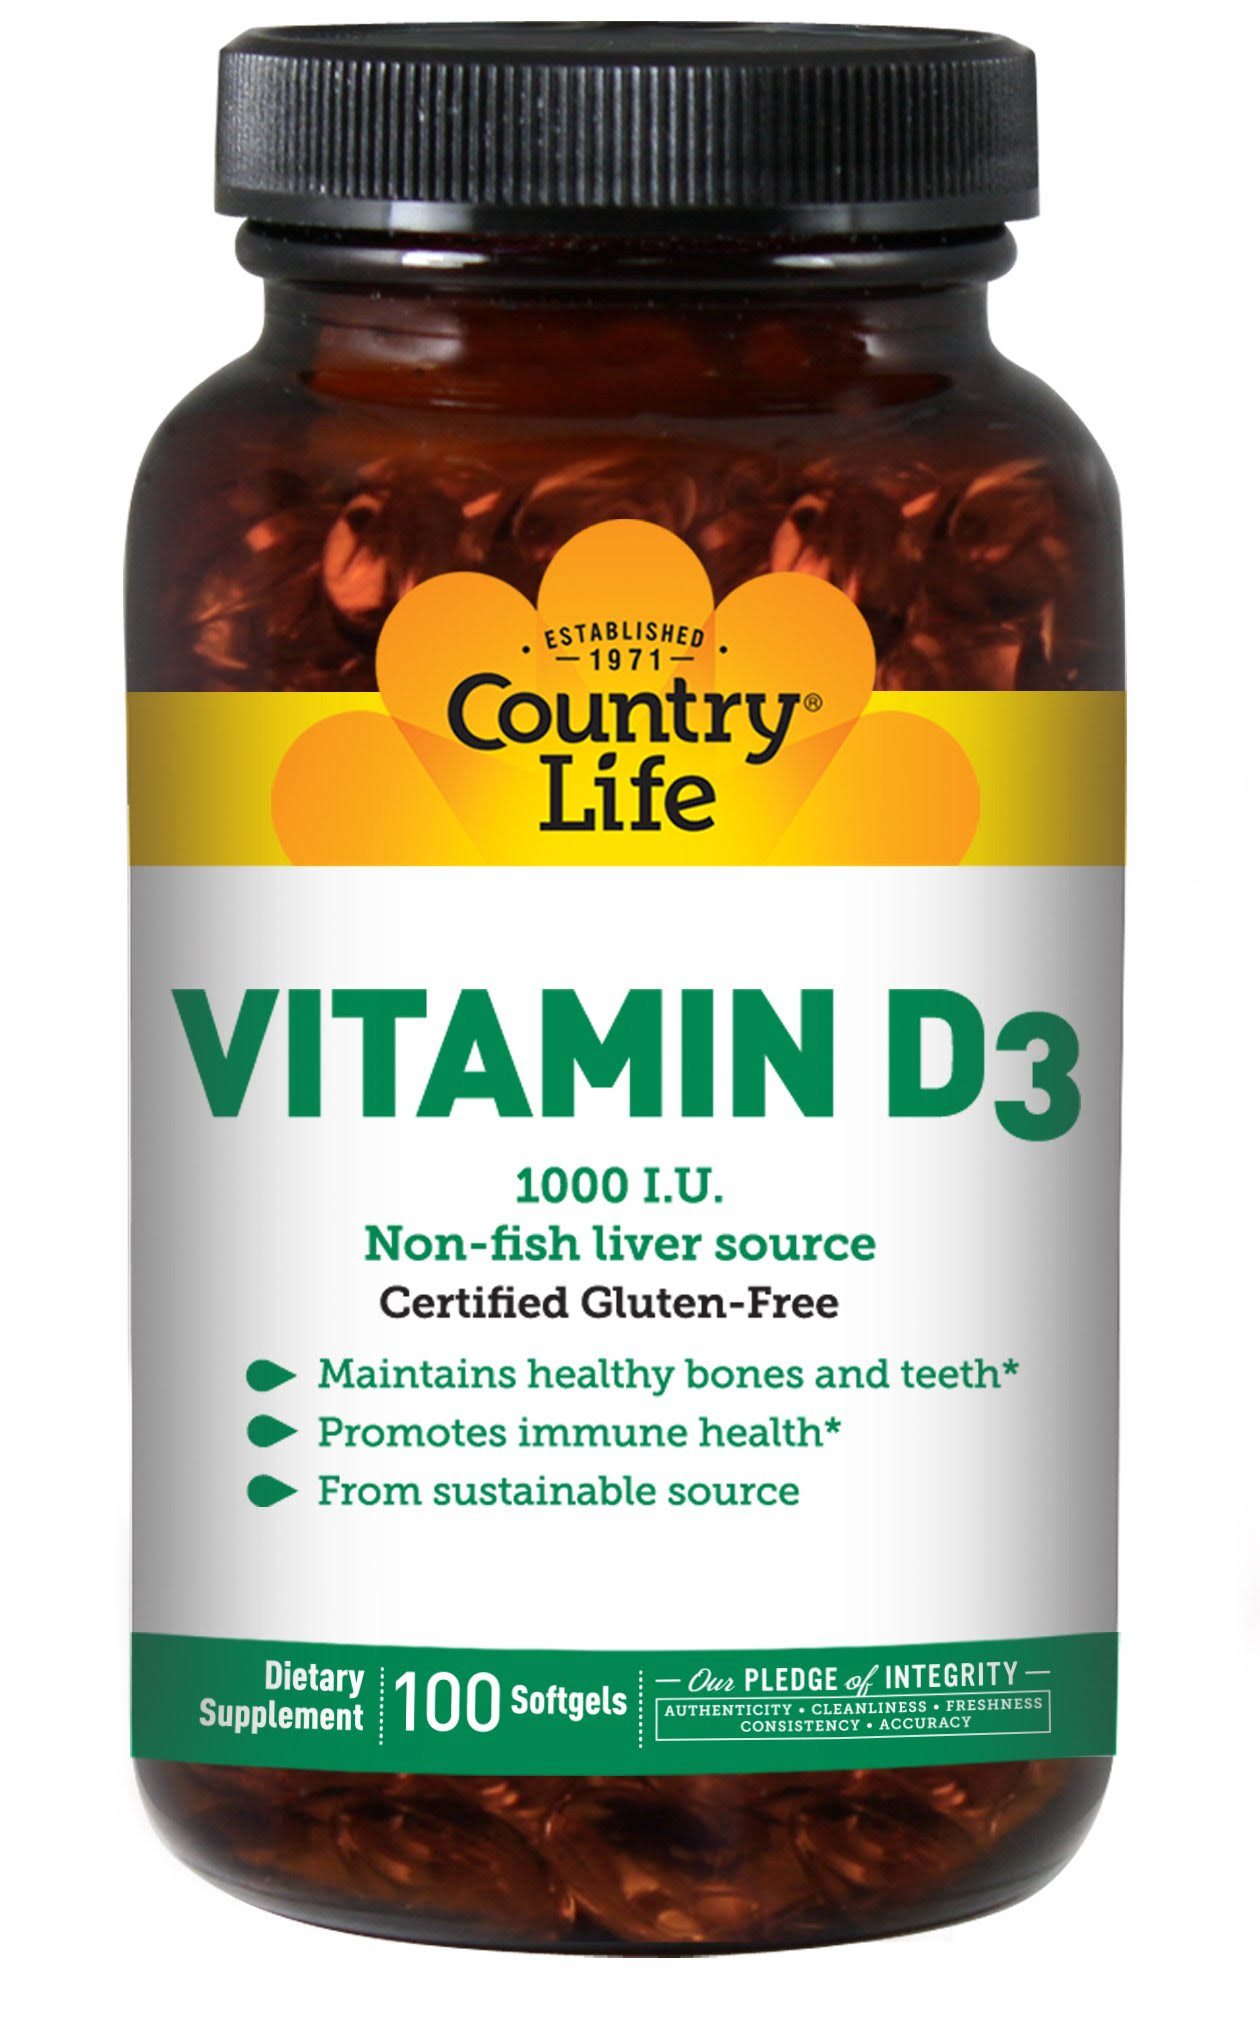 Country Life Vitamin D3 Soft Capsules - 100pcs